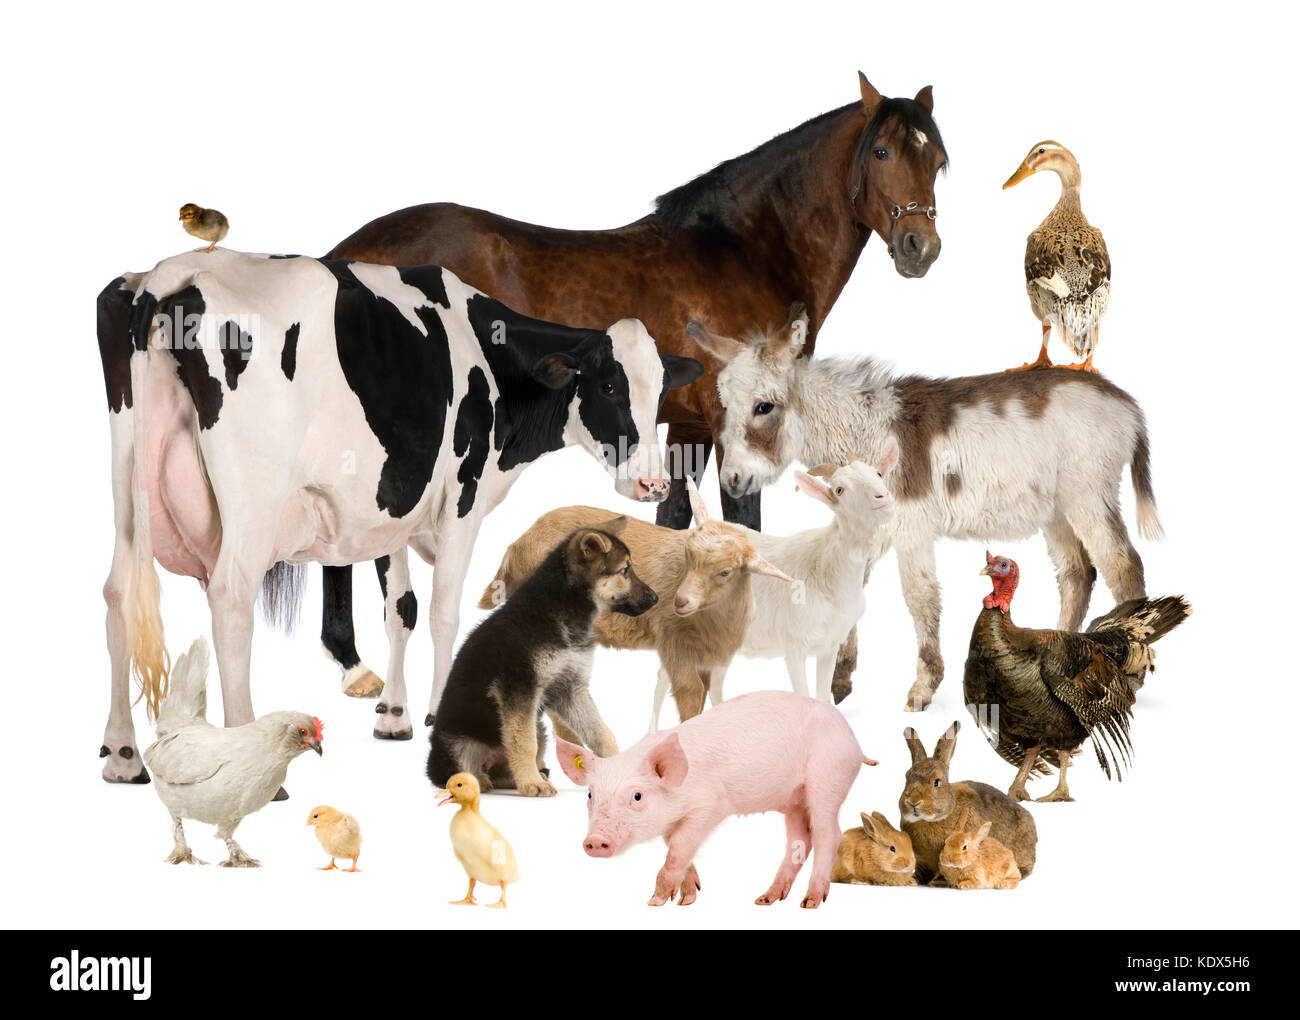 Group of Farm animals: horse, cow, pig, dog, hen, chick, rabbit, duck, turkey, donkey Stock Photo